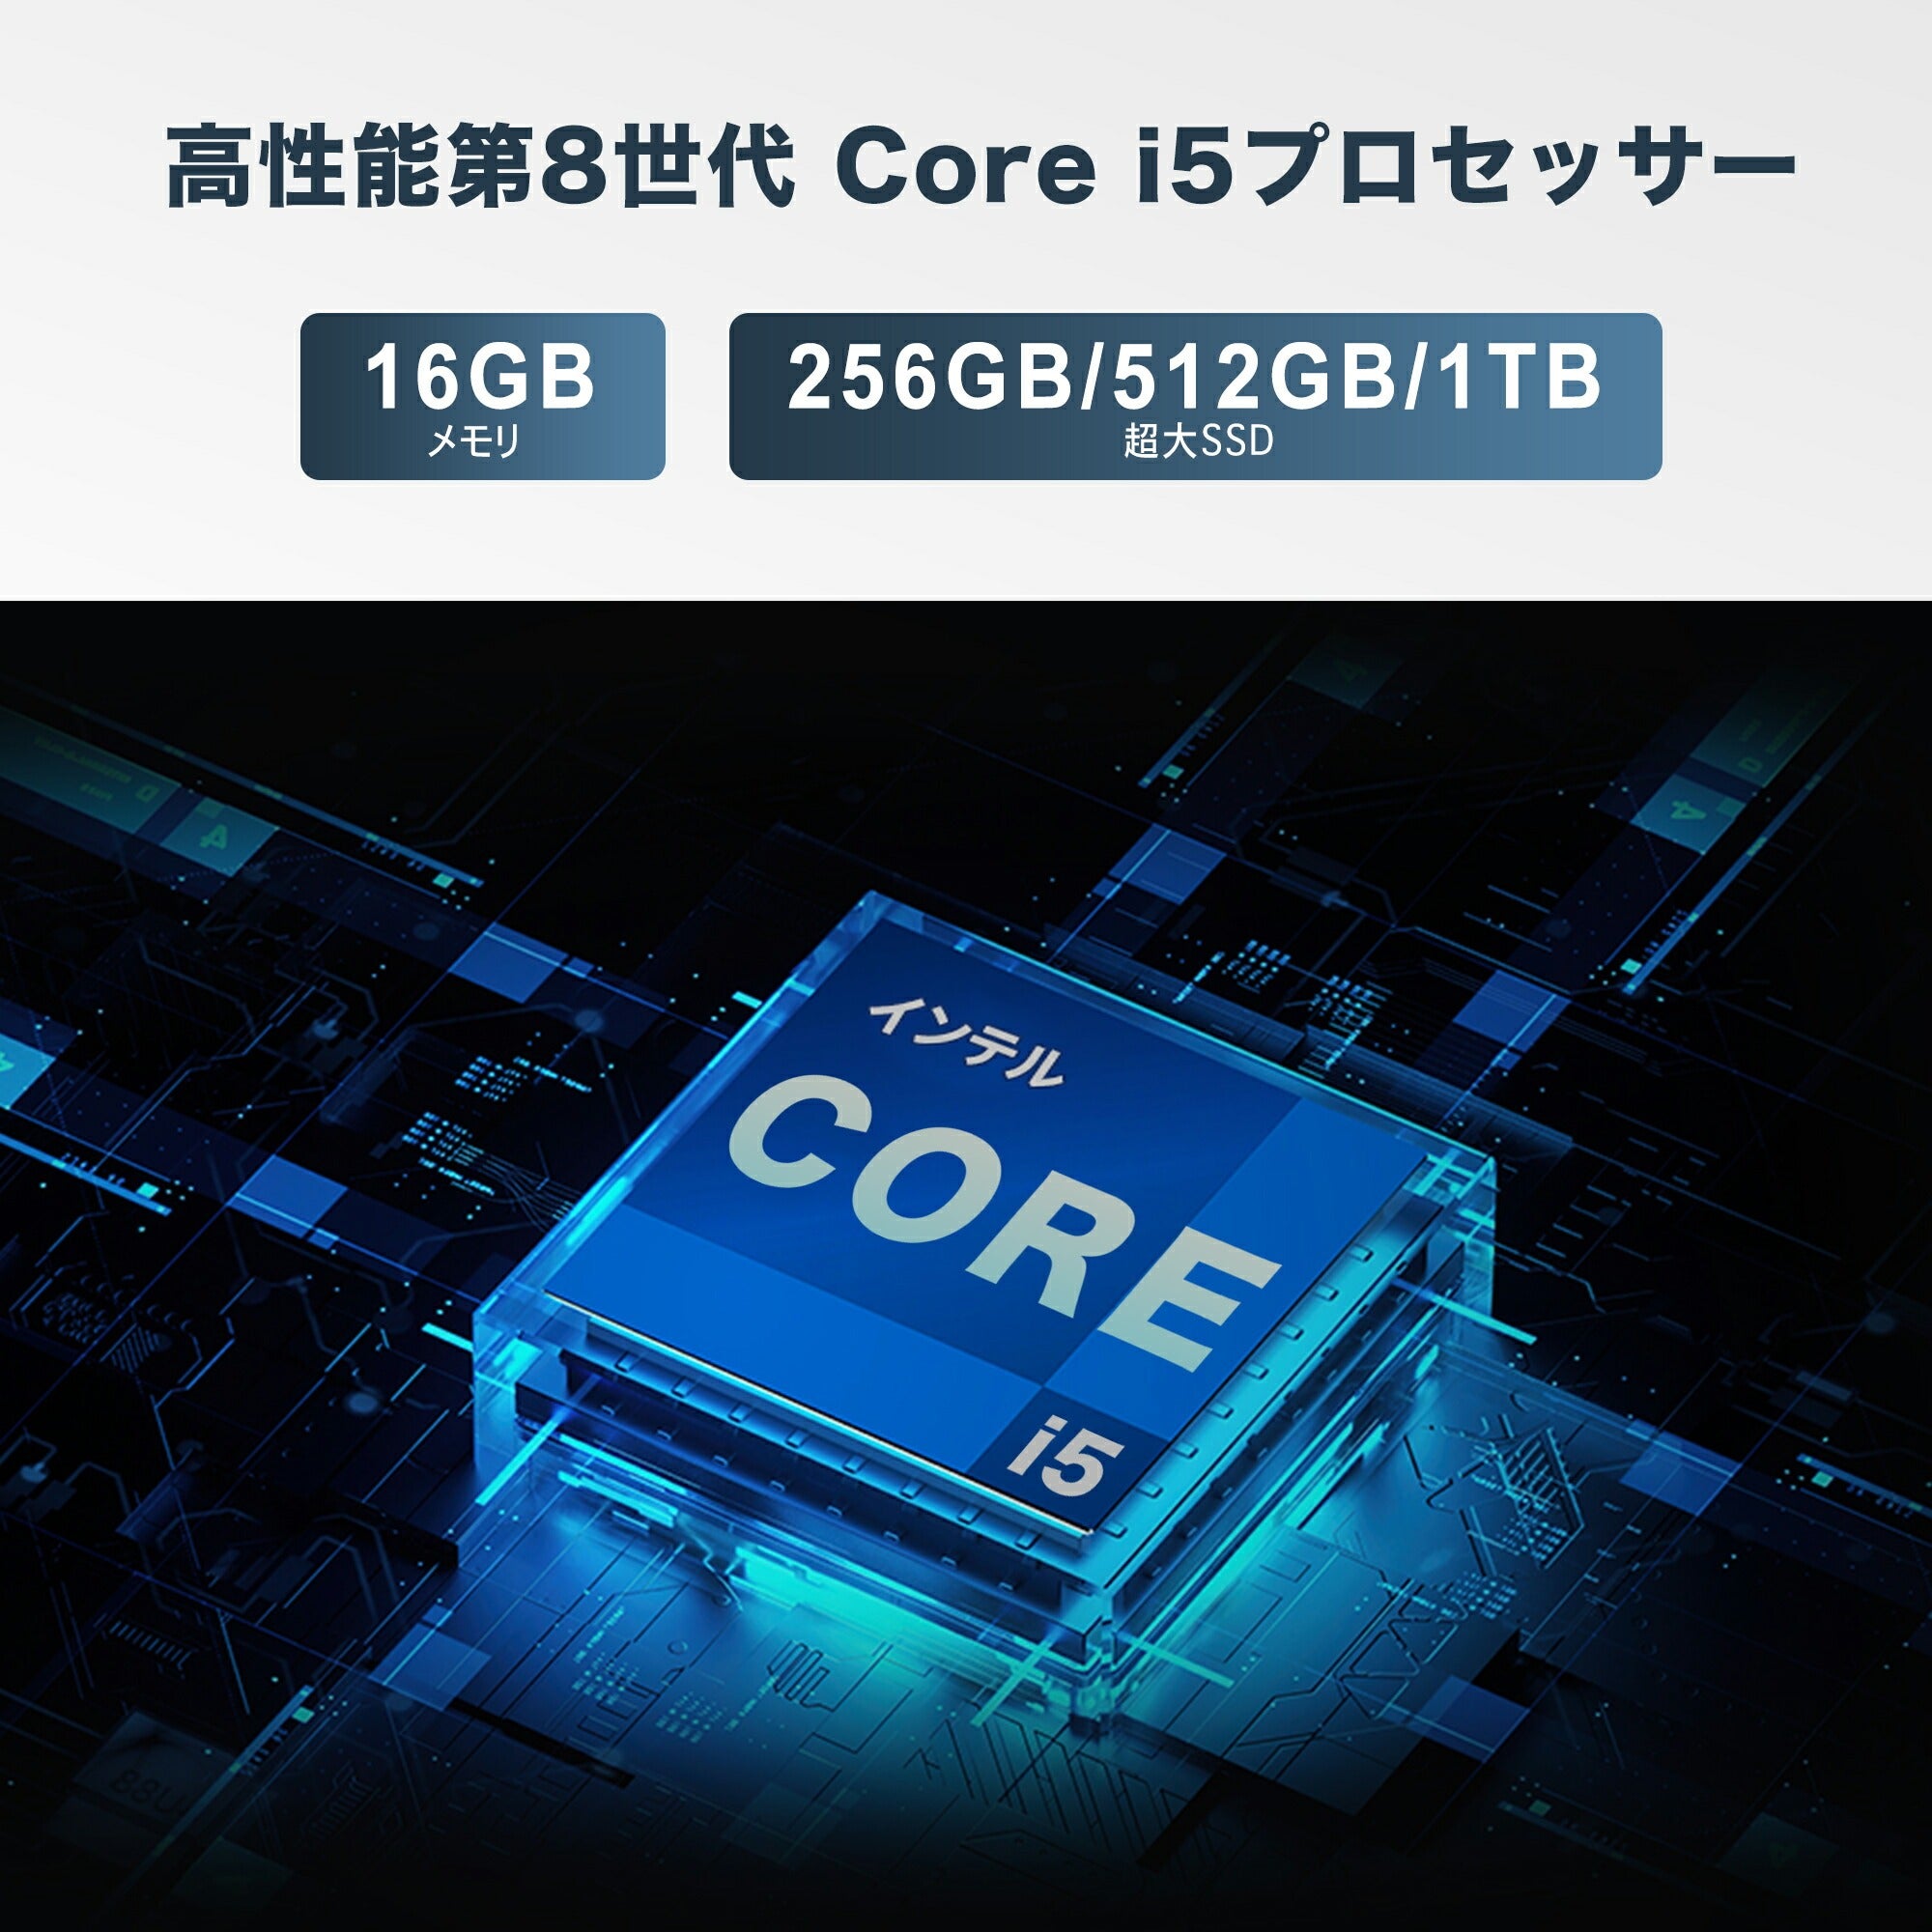 《NEC 15.6型 中古ノートPC》Office付き Windows11 第7世代Core i5 メモリ8GB SSD256GB DVDドライブ  (nec-15bf-i58-cam-10k)